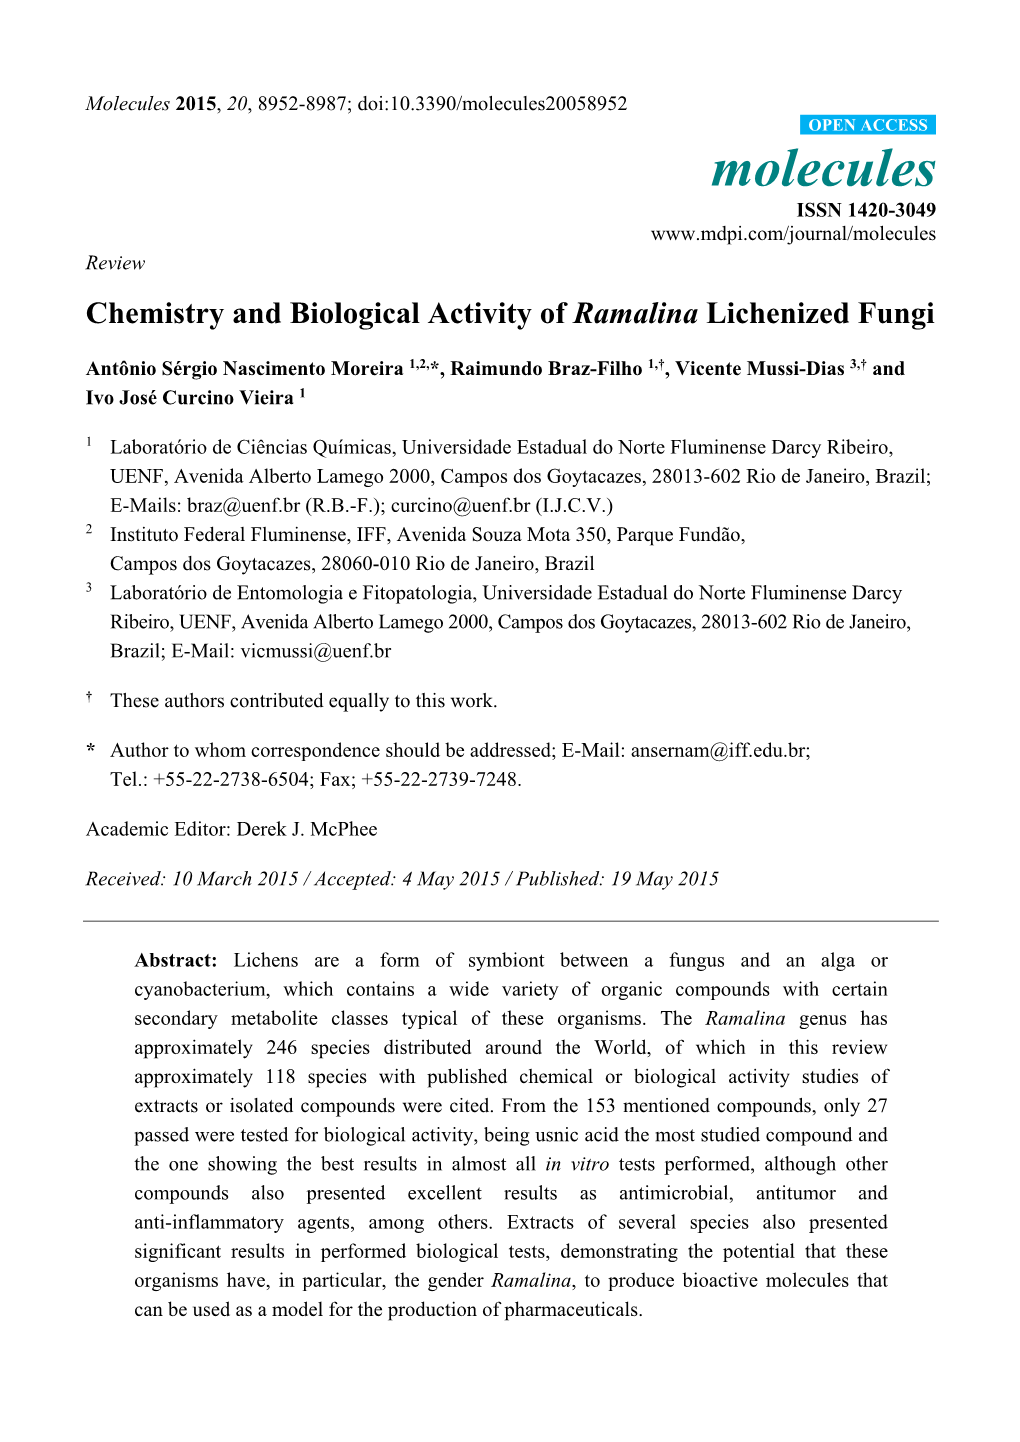 Chemistry and Biological Activity of Ramalina Lichenized Fungi